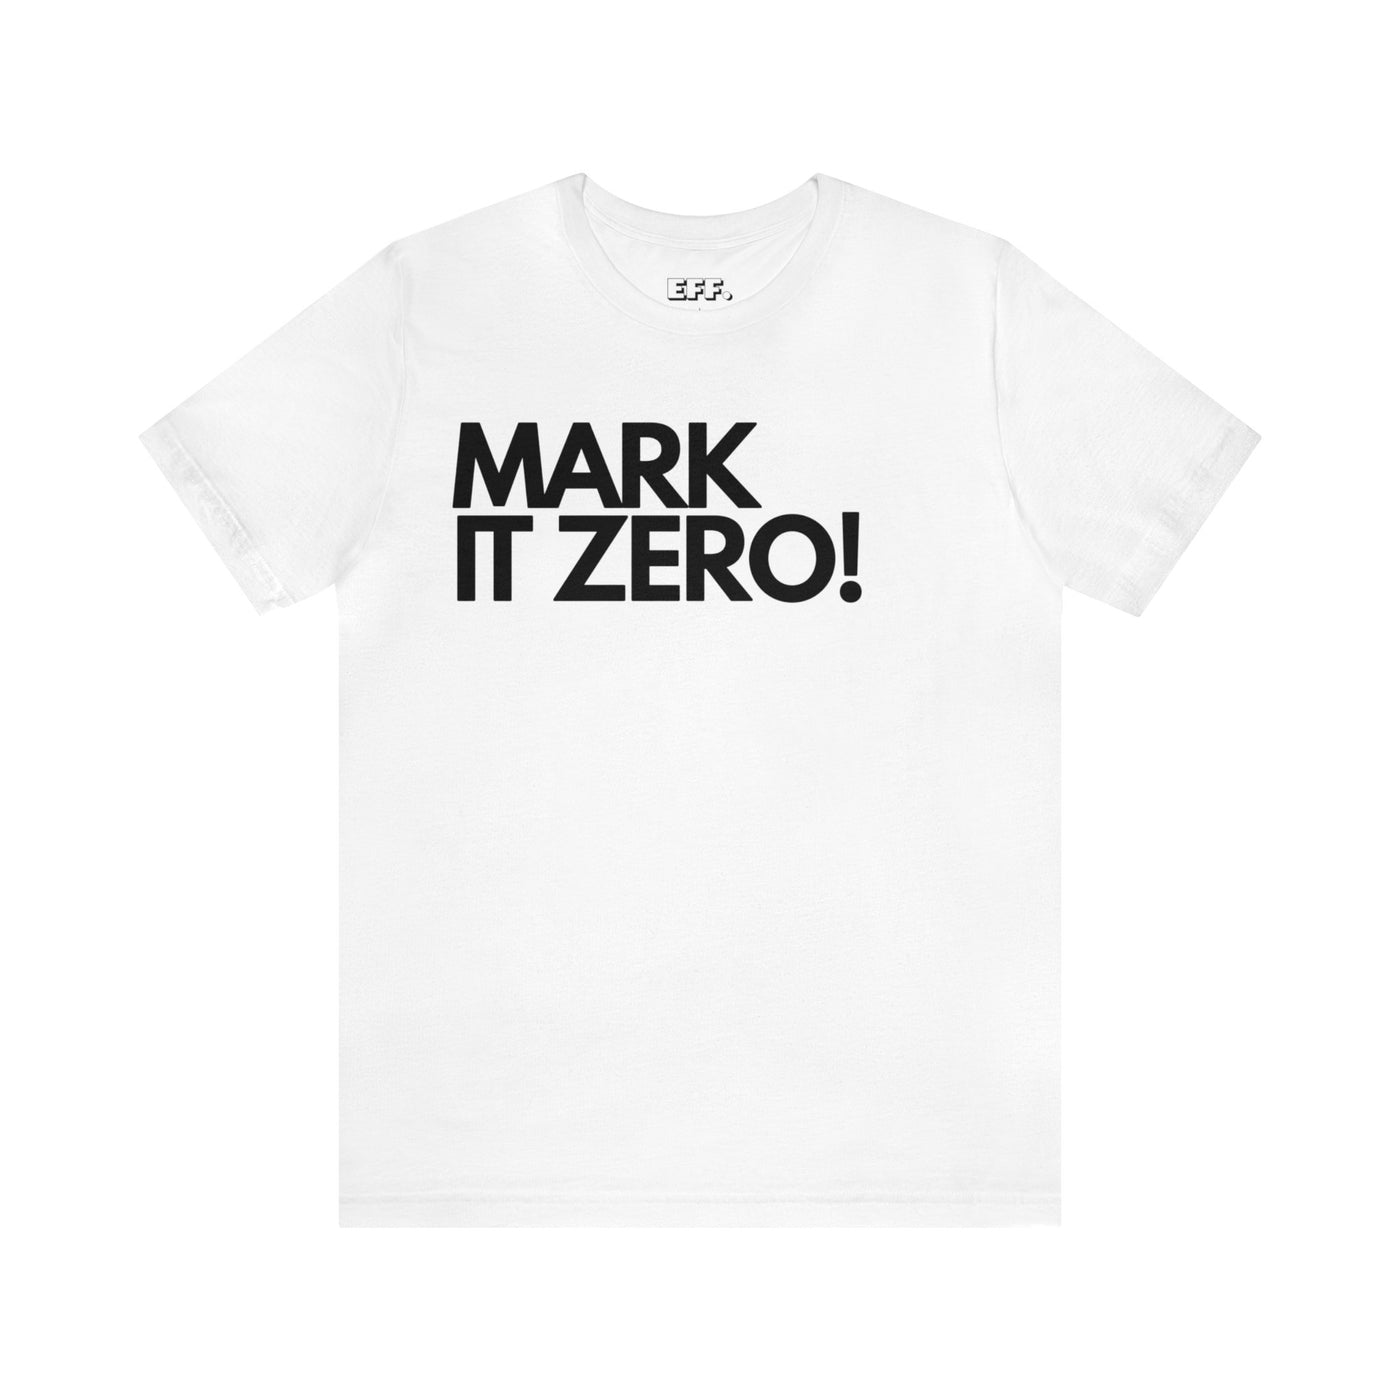 Mark It Zero!